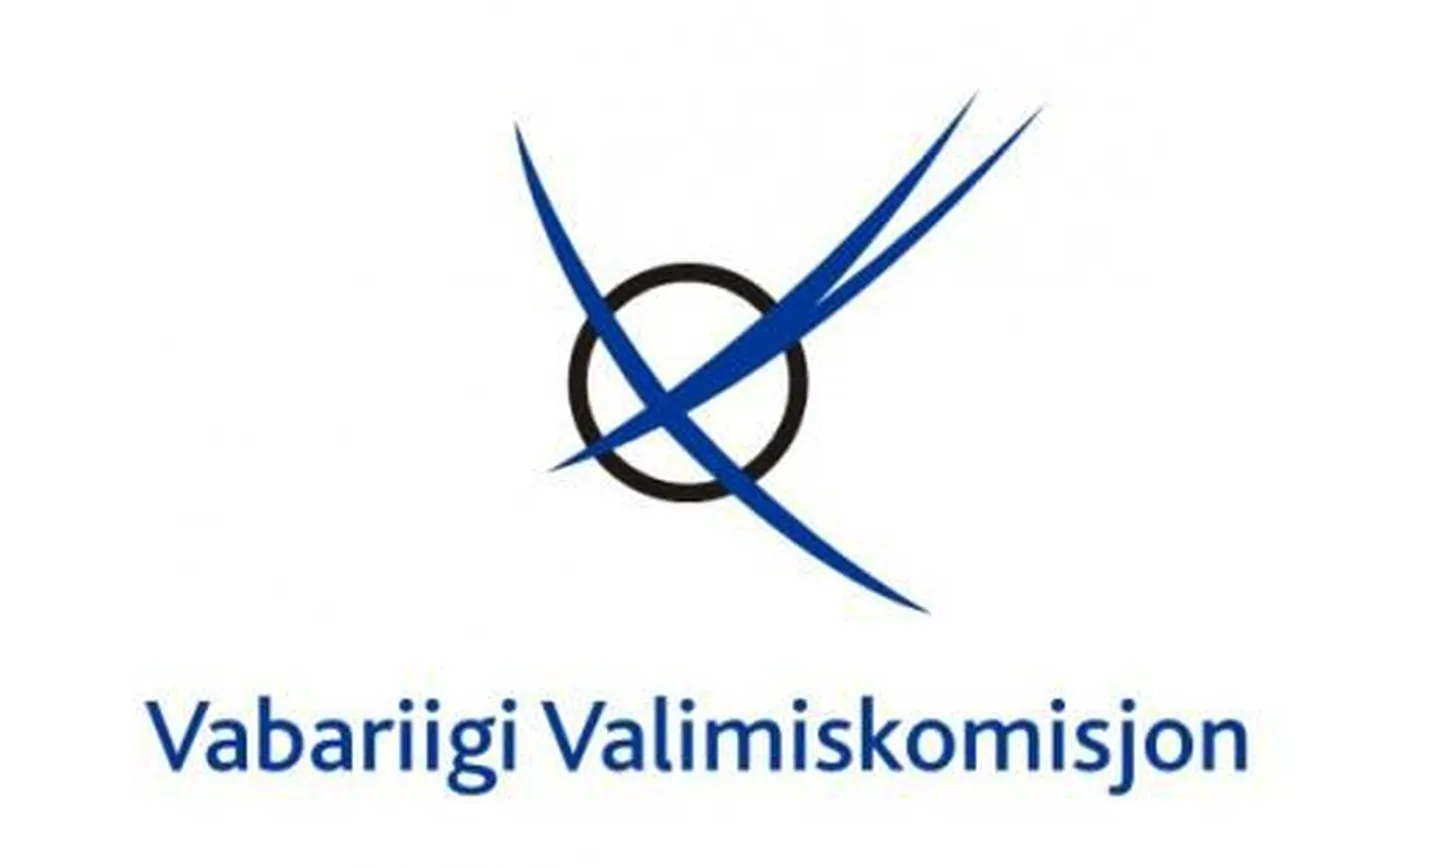 Vabariigi valimiskomisjoni logo.